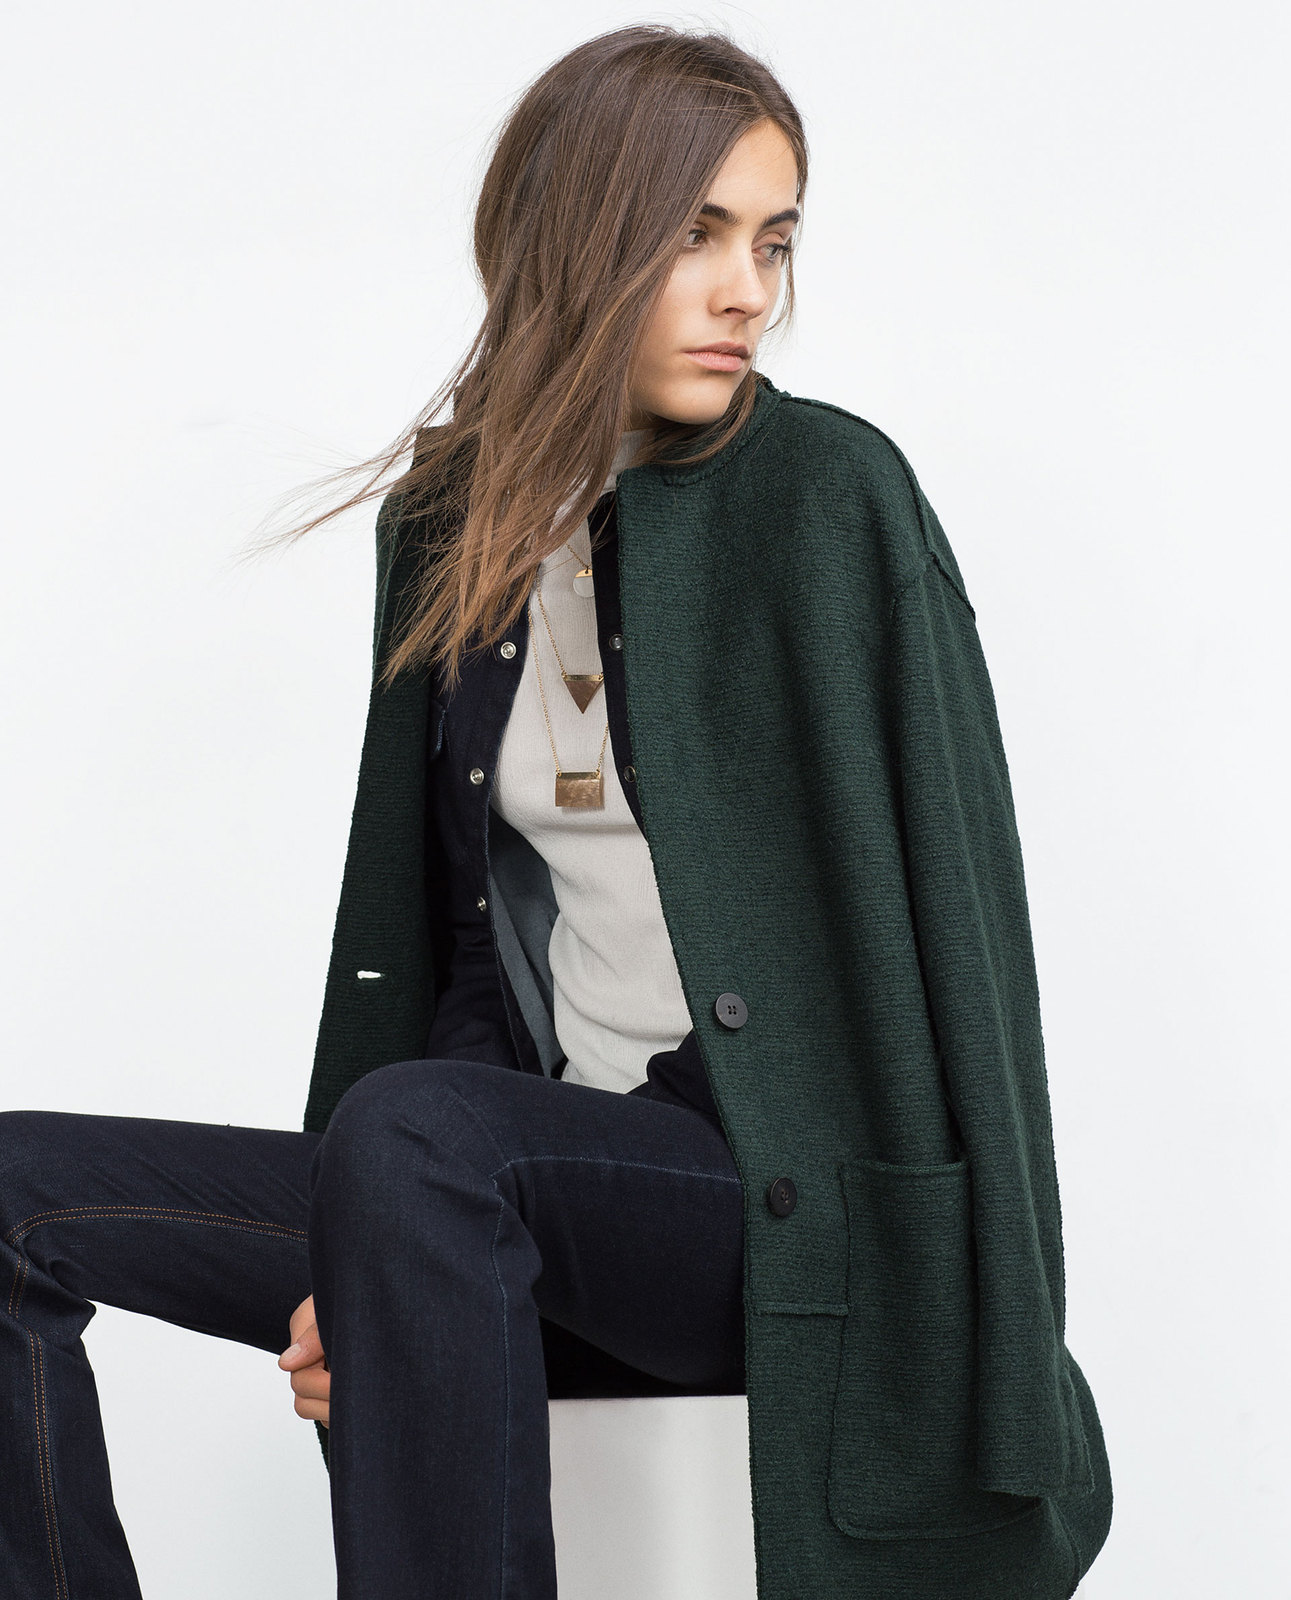 Zara sötétzöld női gyapjú kabát 2015.10.15 fotója